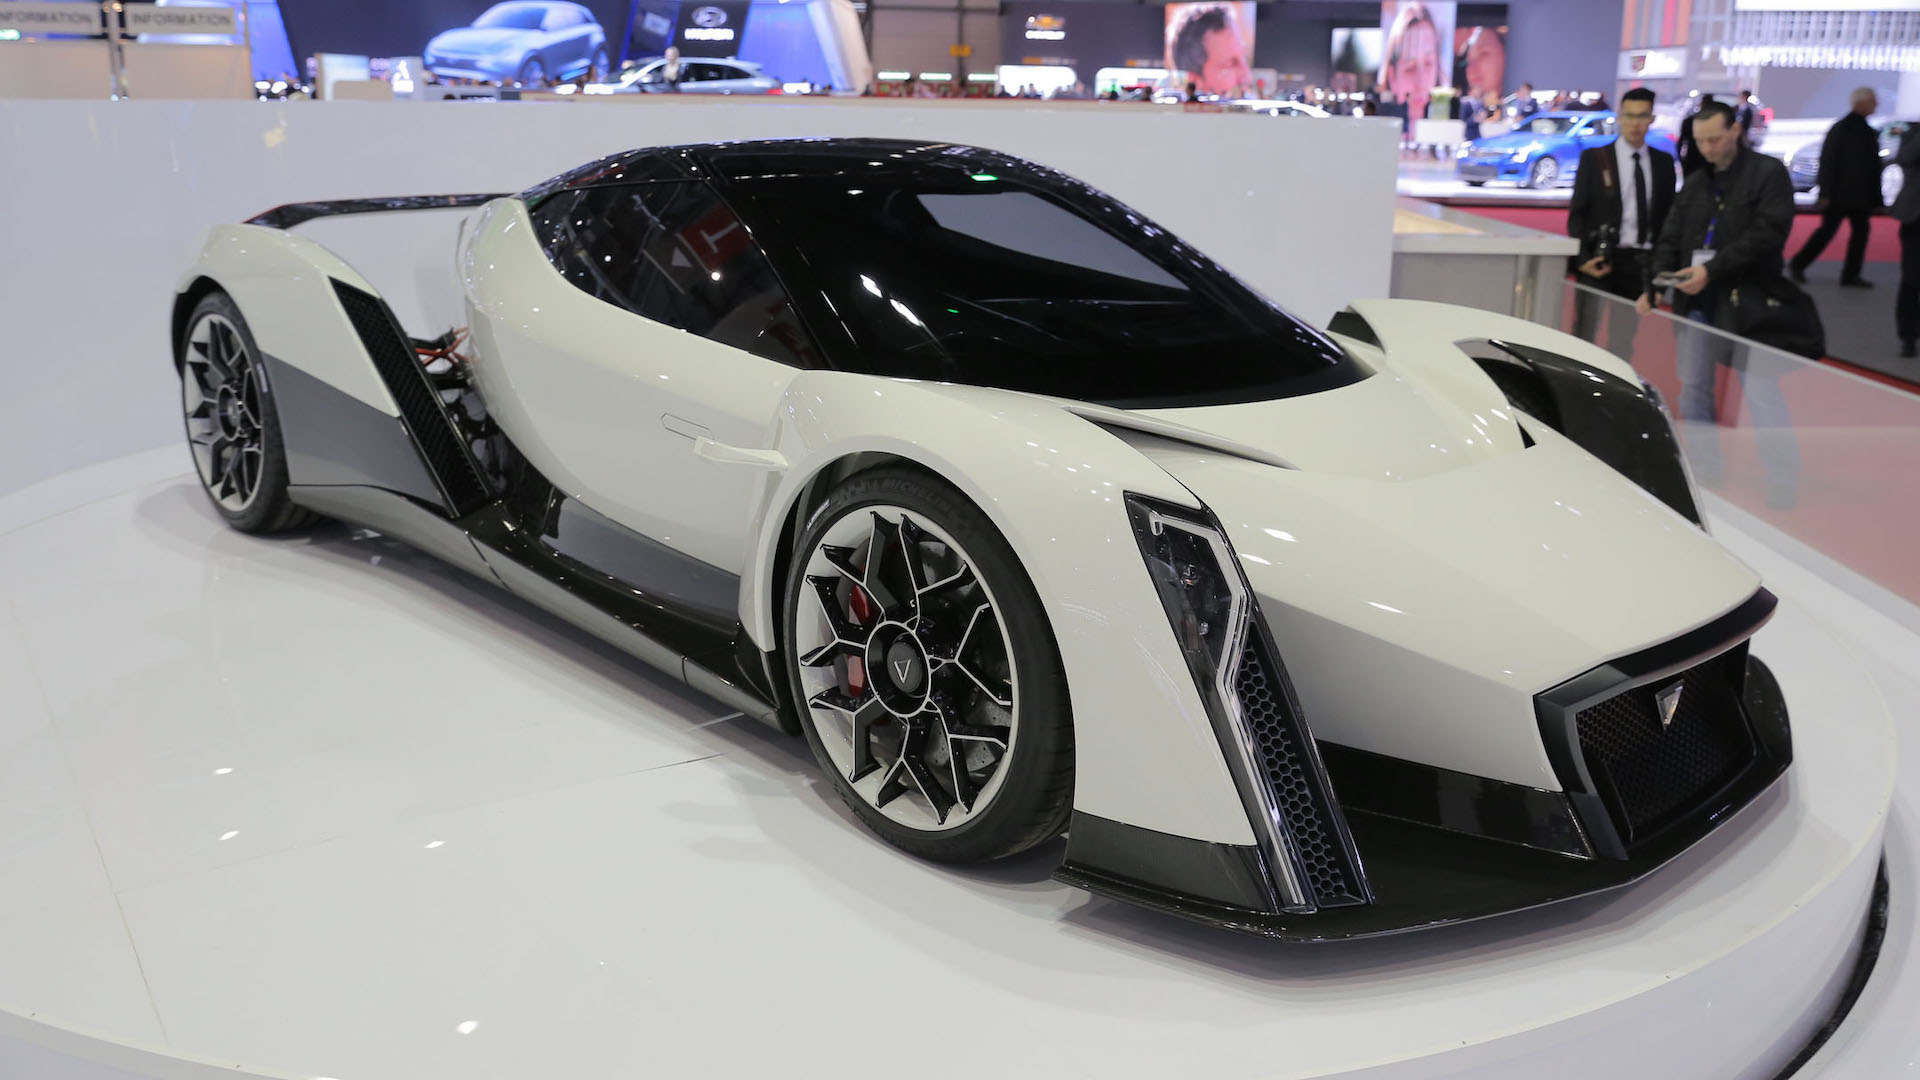 6 cars making over 1,000 hp debuted in Geneva